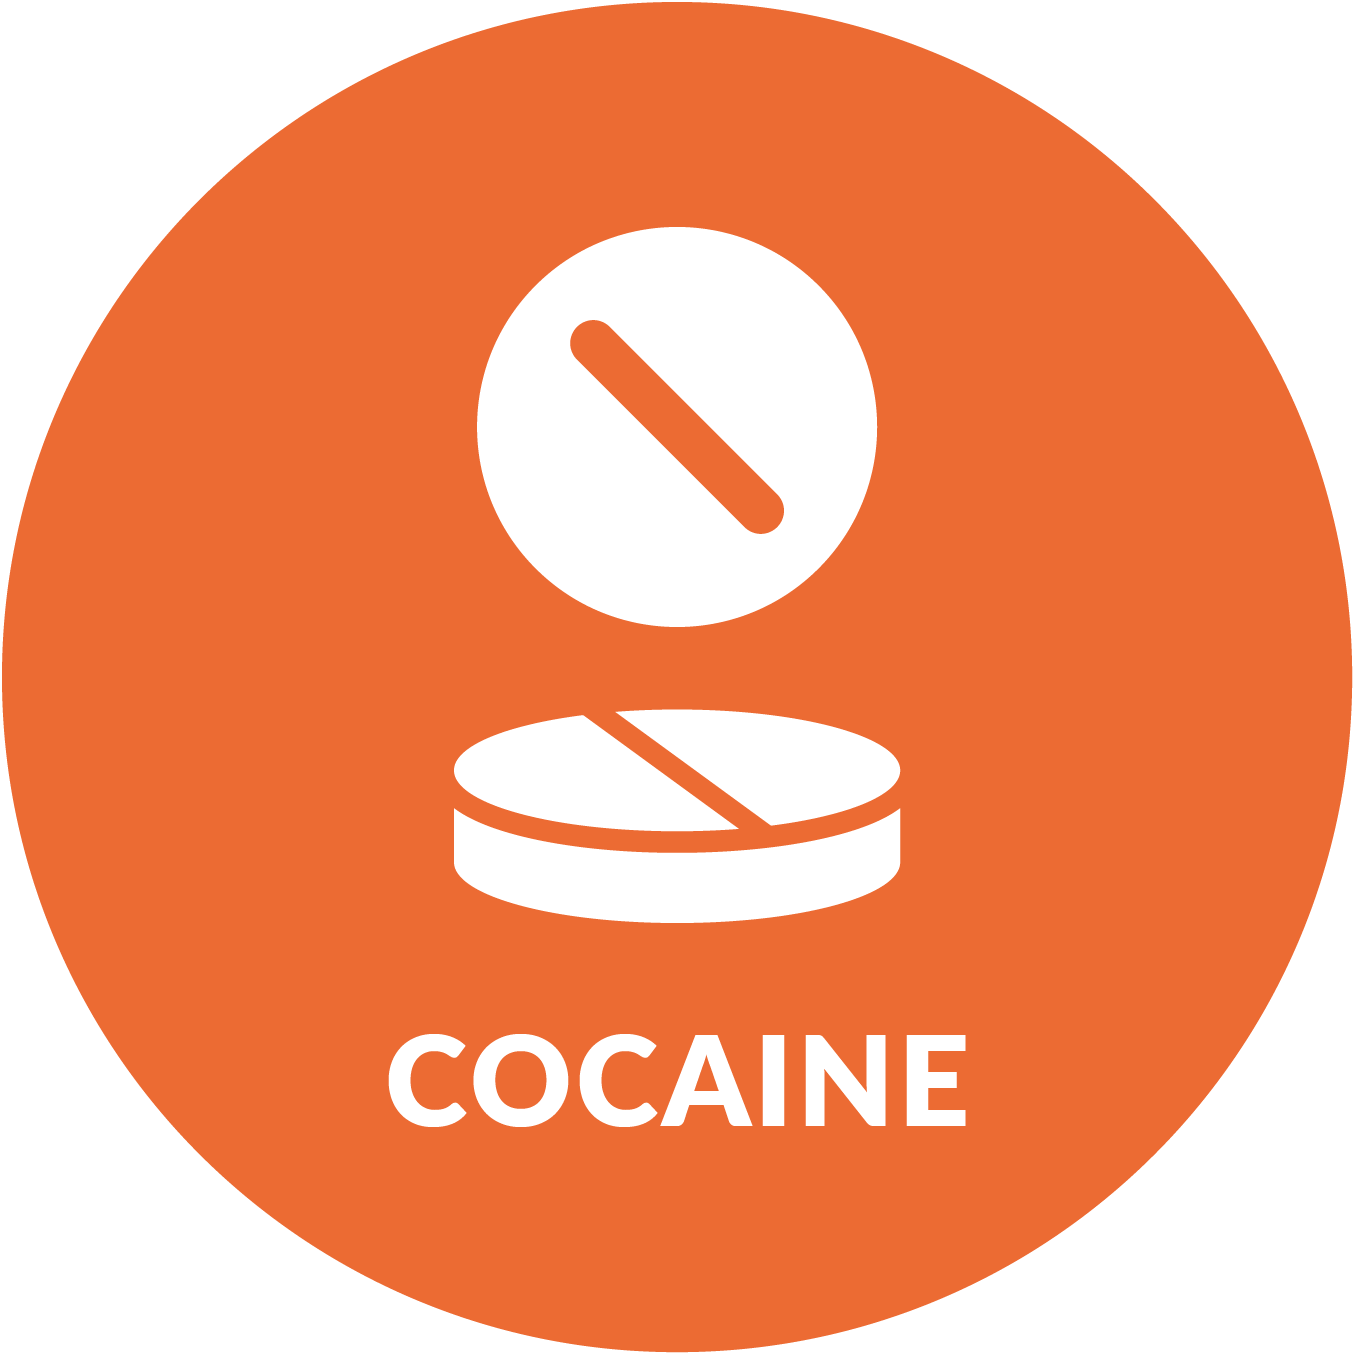 Cocaine Treatment